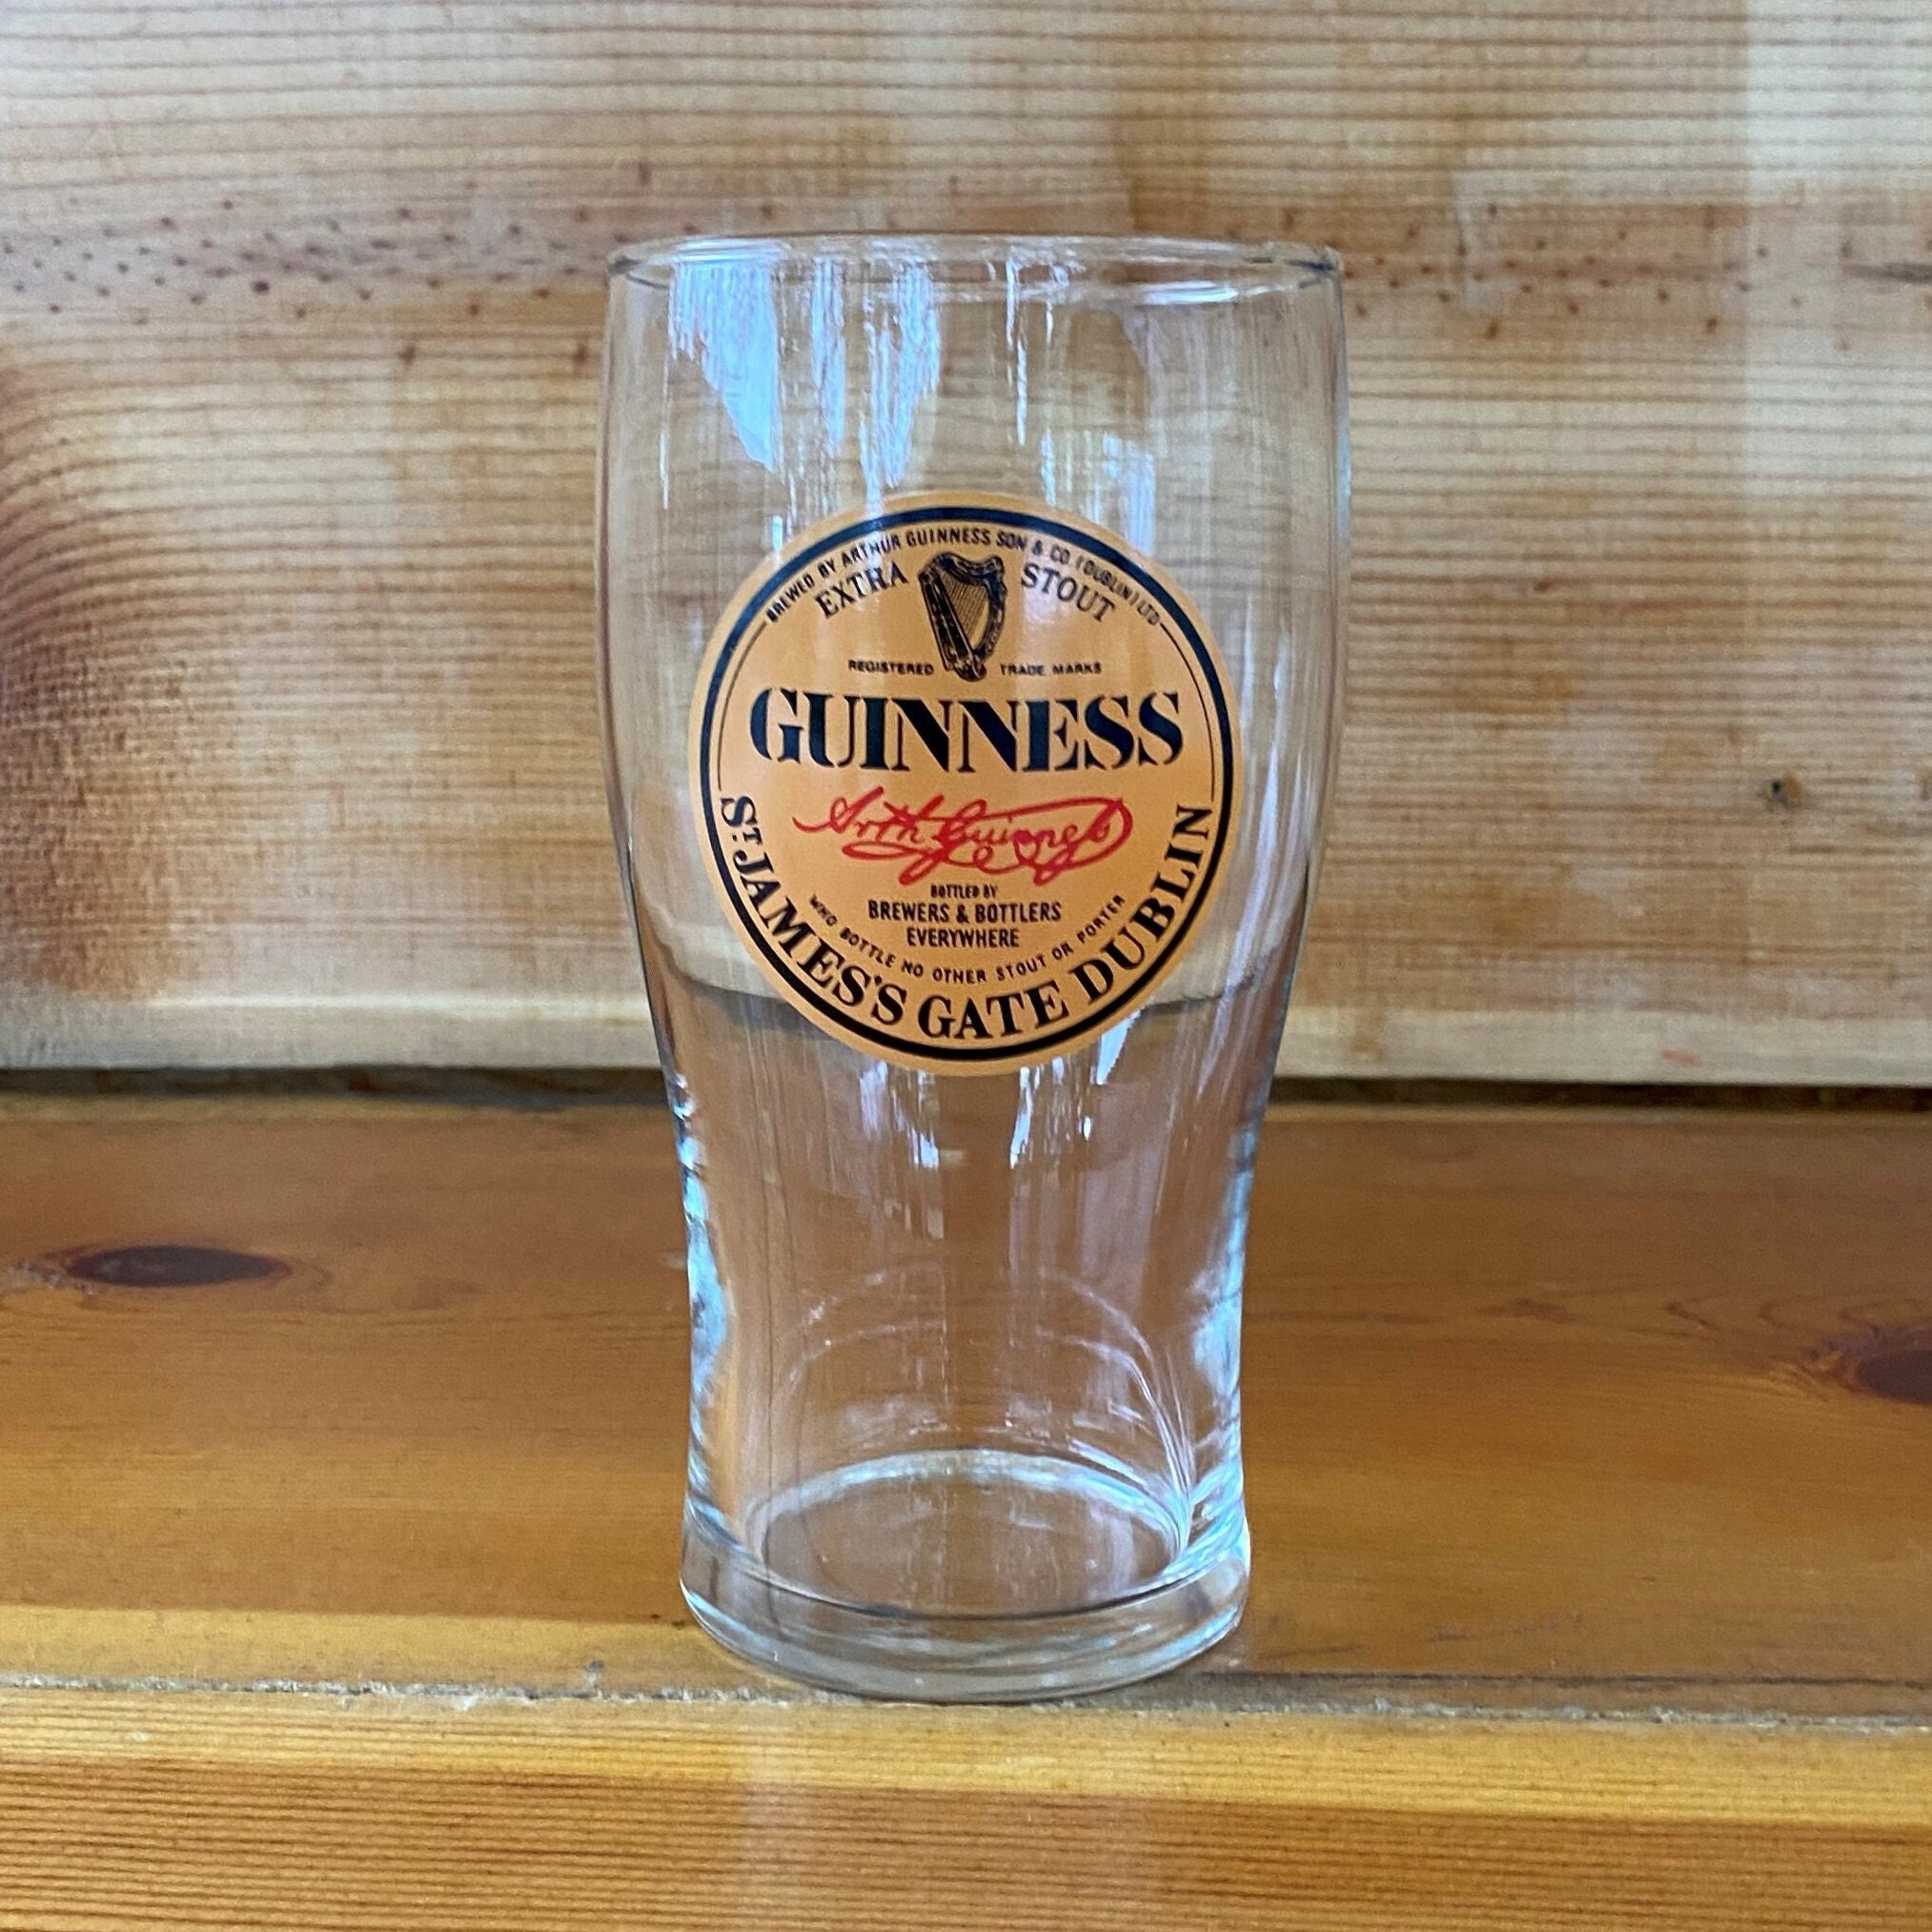 4 Guinness Pint Beer 20 oz Pub Glasses w/ Harp Brewed in Dublin Set Vintage  NOS